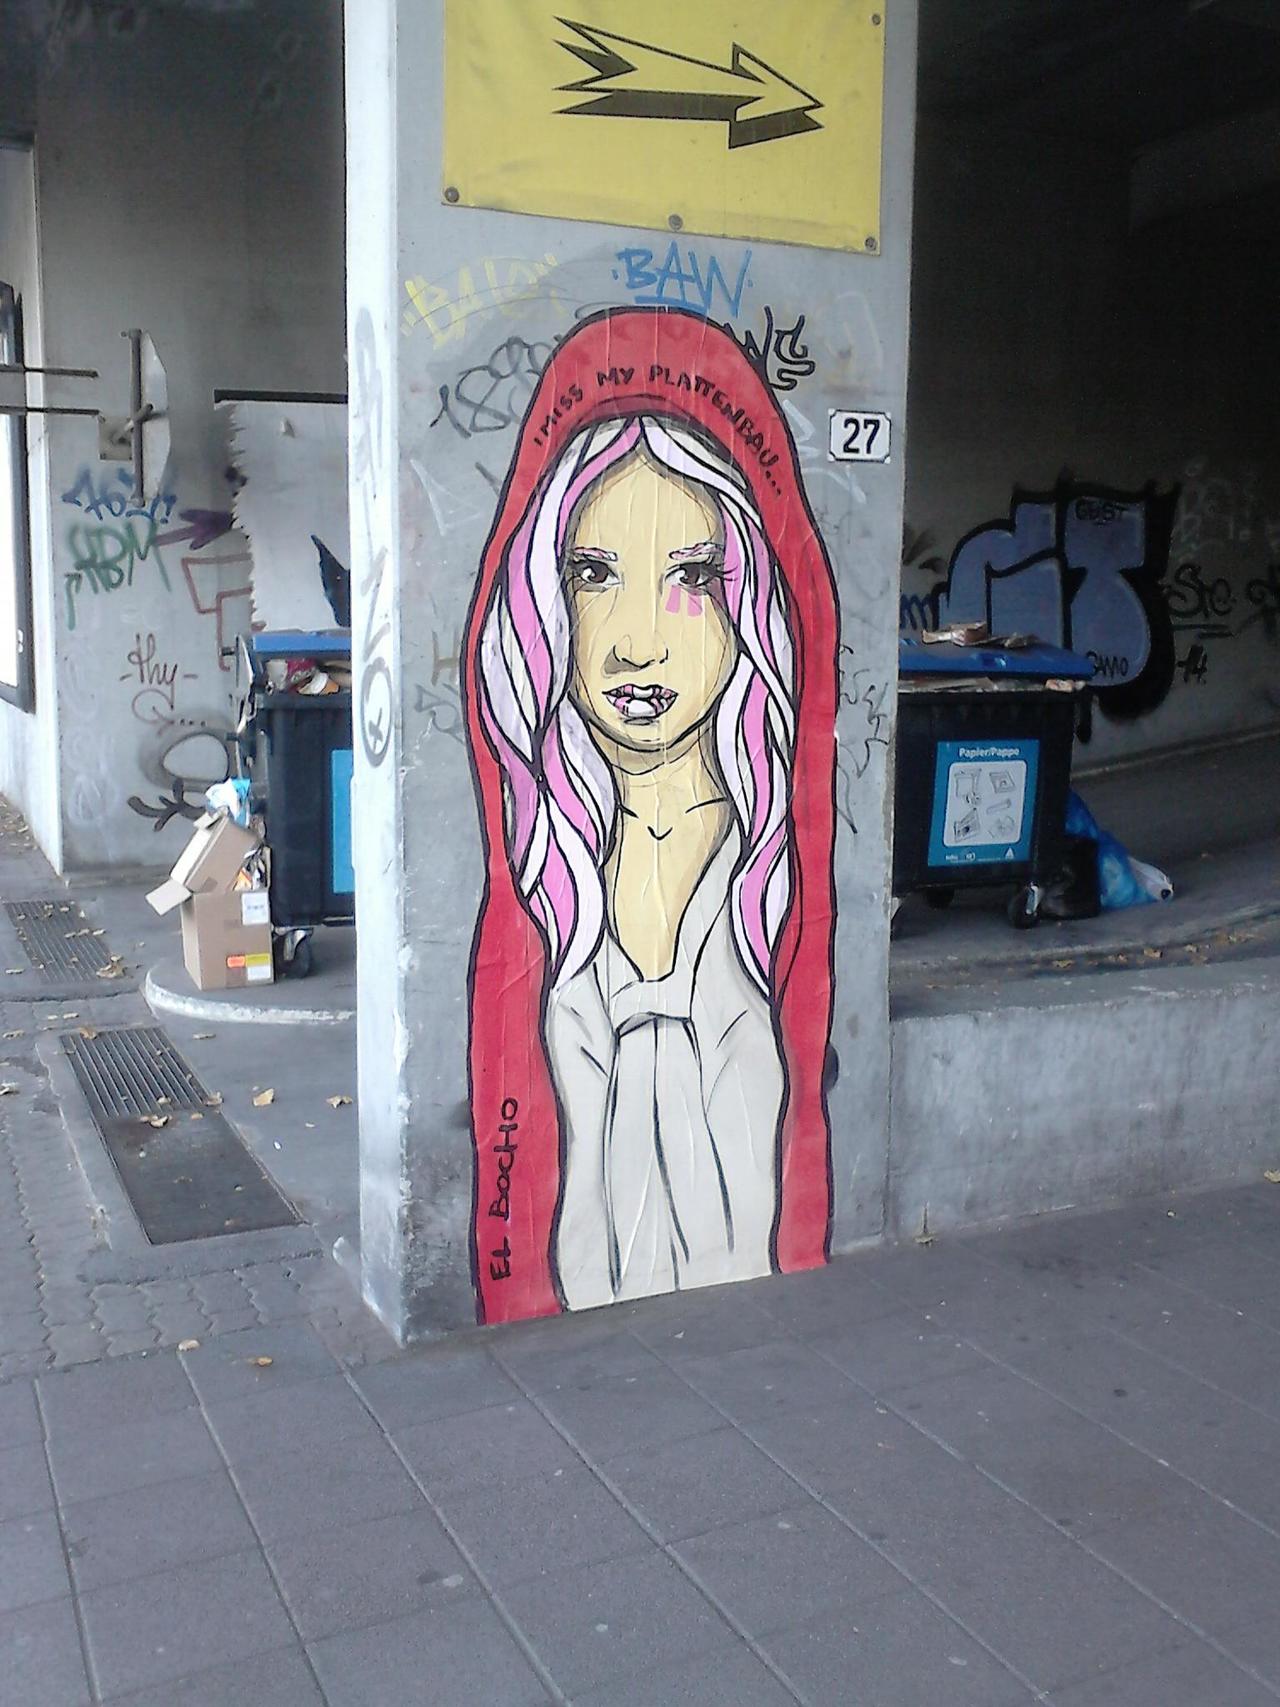 Graffiti Karlsruhe, Germany
#streetart #art #urbanart #graffiti #karlsruhe http://t.co/hNMwZWNc9N